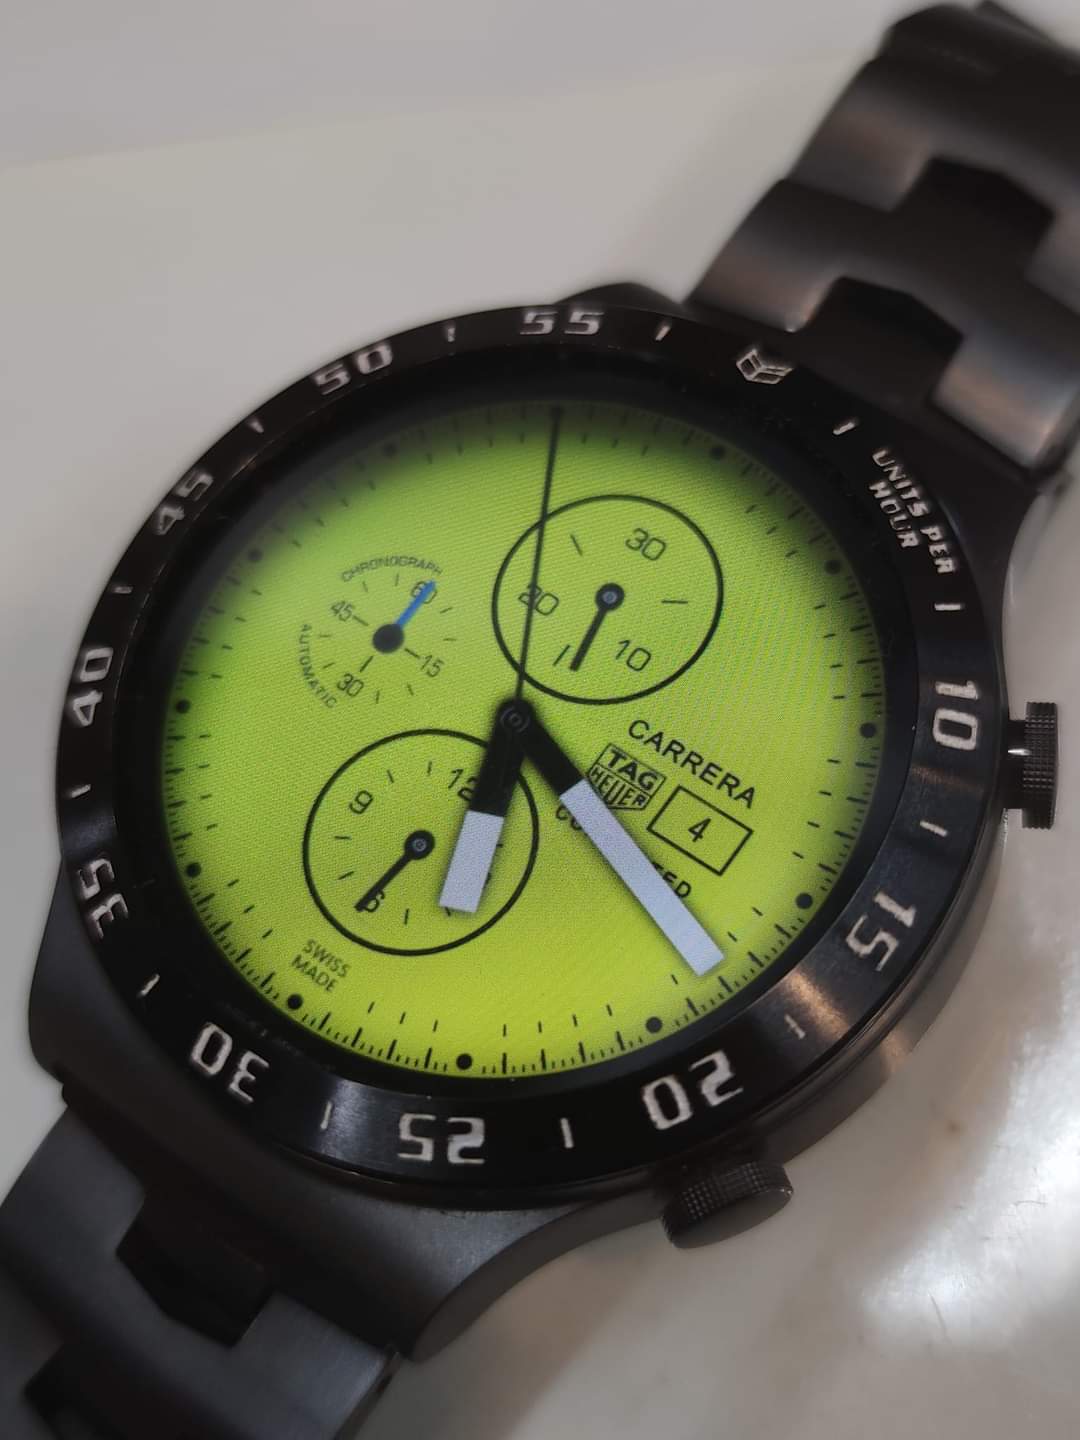 Carrera tag heuer yellow FC hybrid watchface theme